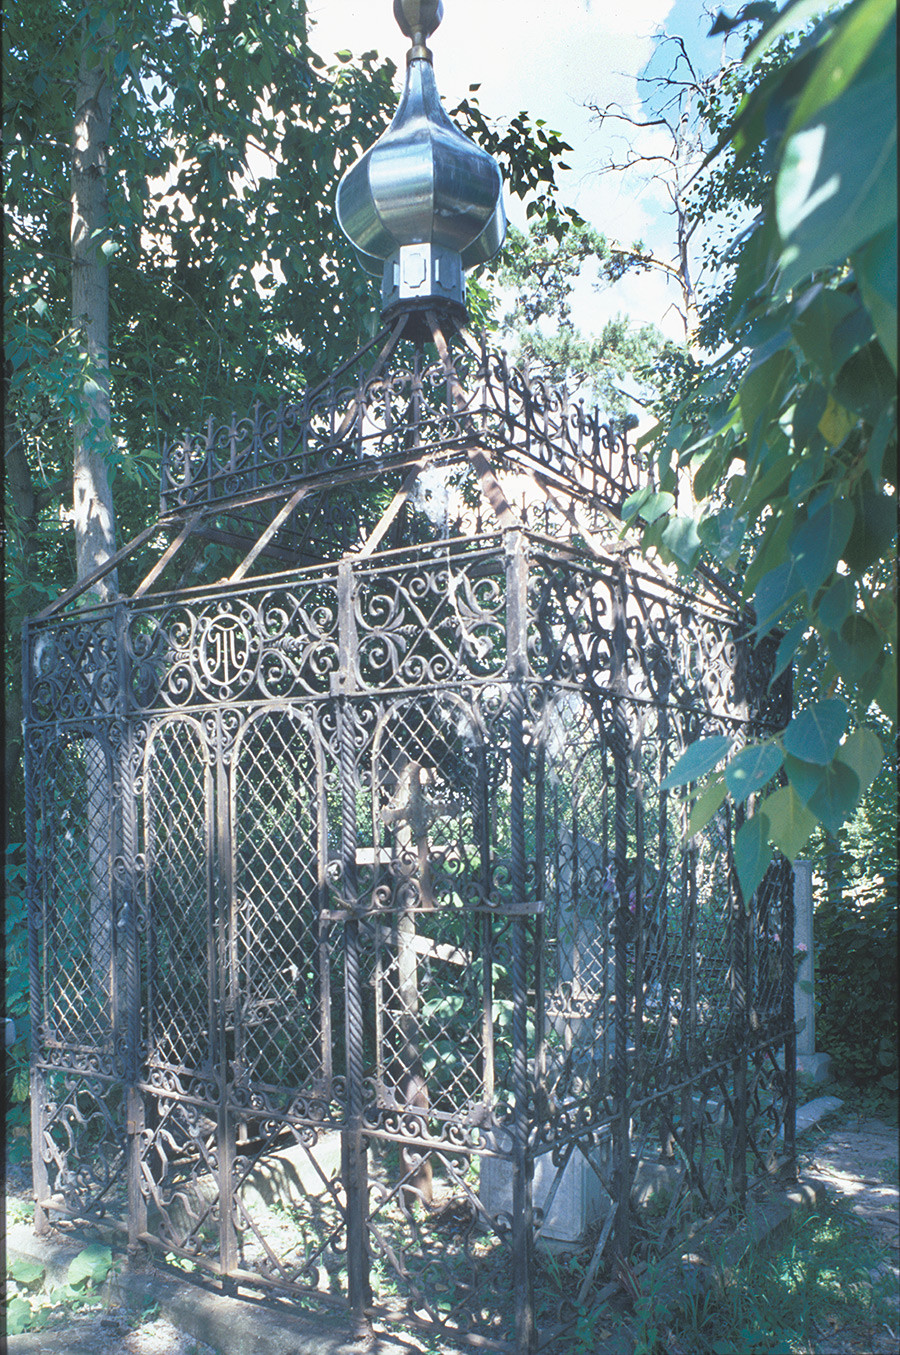 Kasli Cemetery. Burial plot enclosed with Kasli decorative iron work. July 14, 2003 